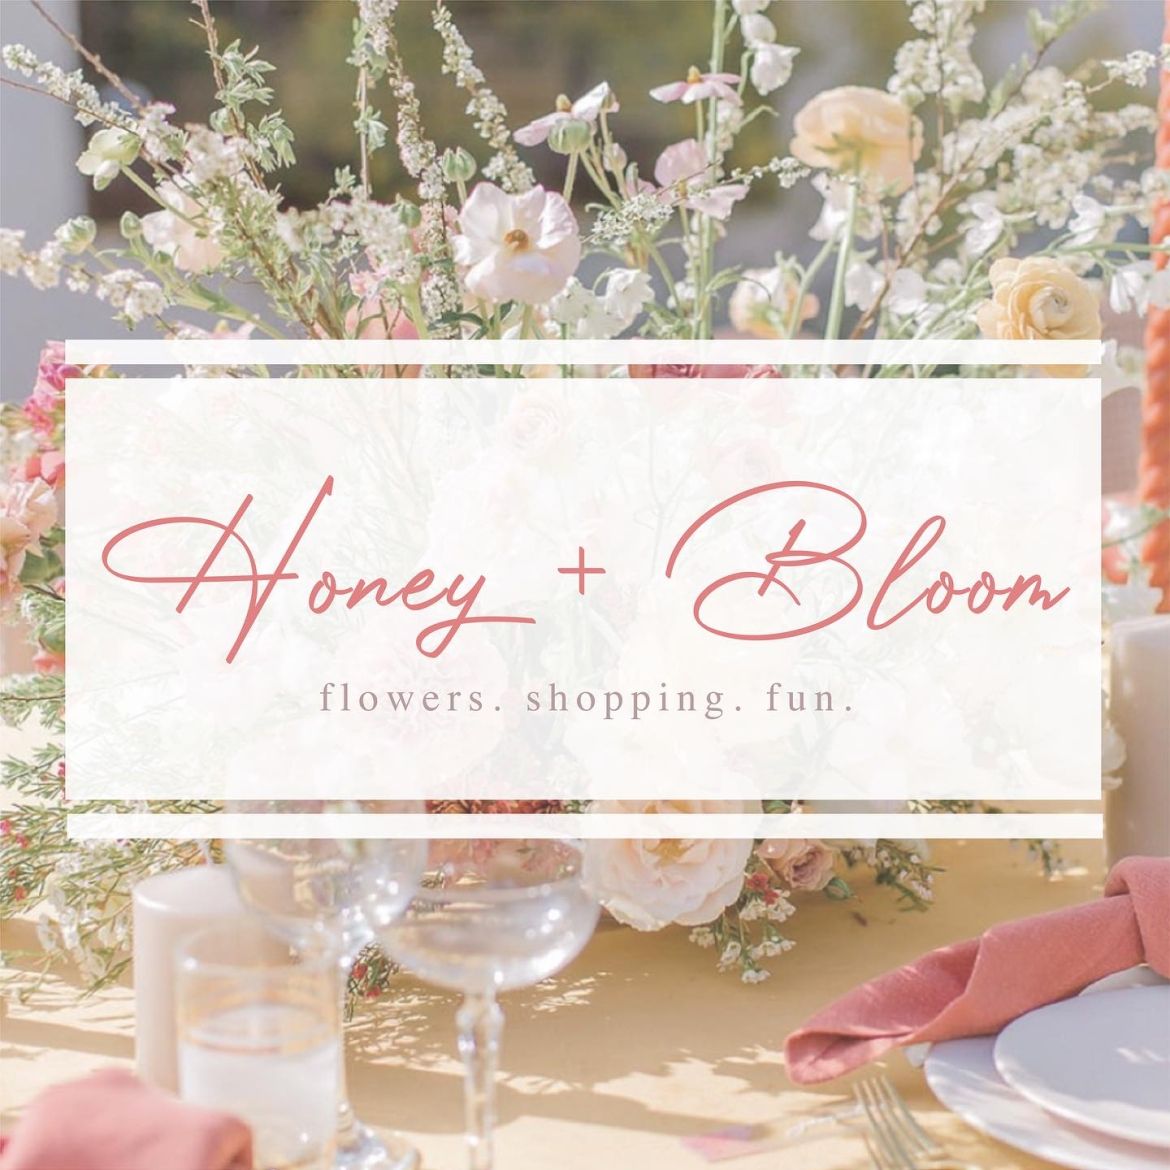 Logo for Honey + Bloom shopping event at The Shops on Sydenham